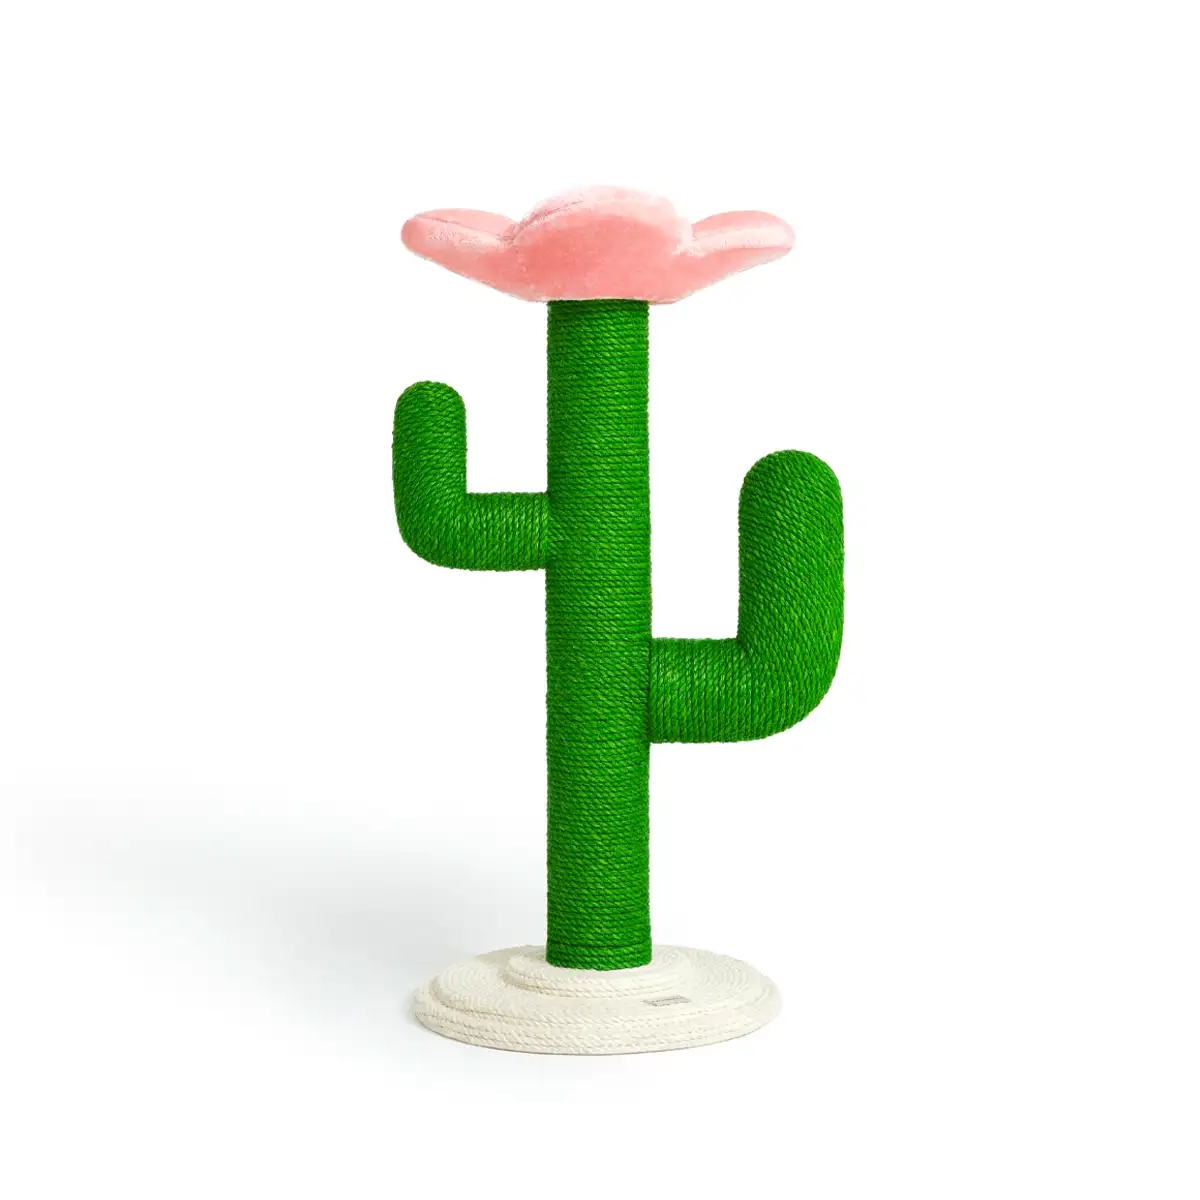 Vetreska - Blooming Cactus Cat Tree